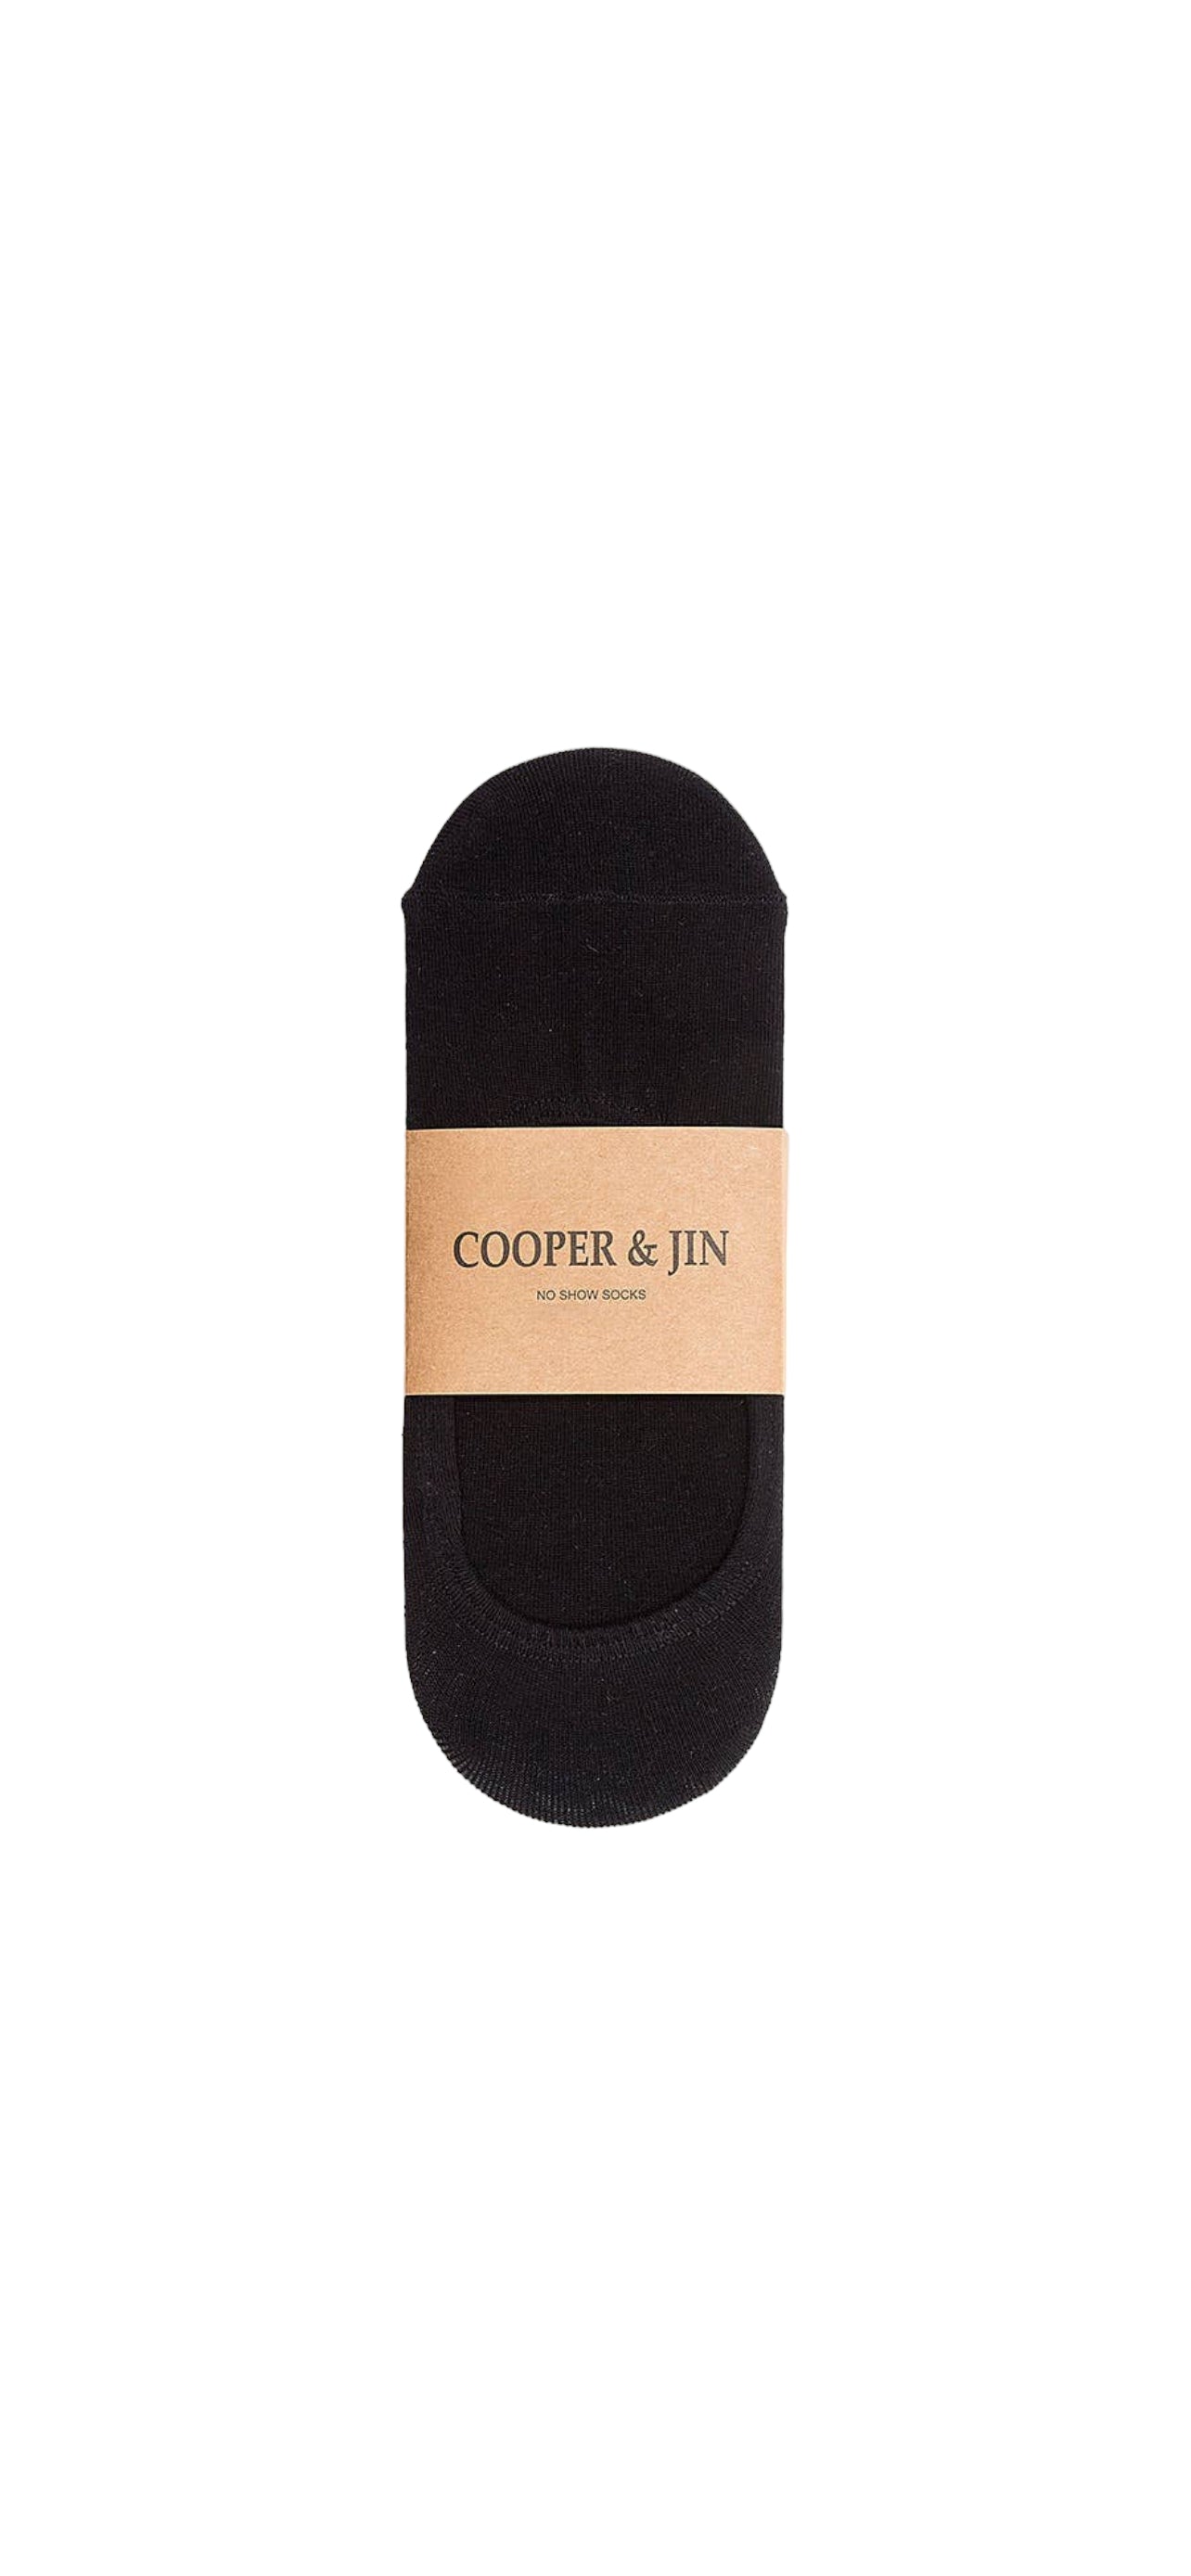 Cooper & Jin Everyday No-Show Socks